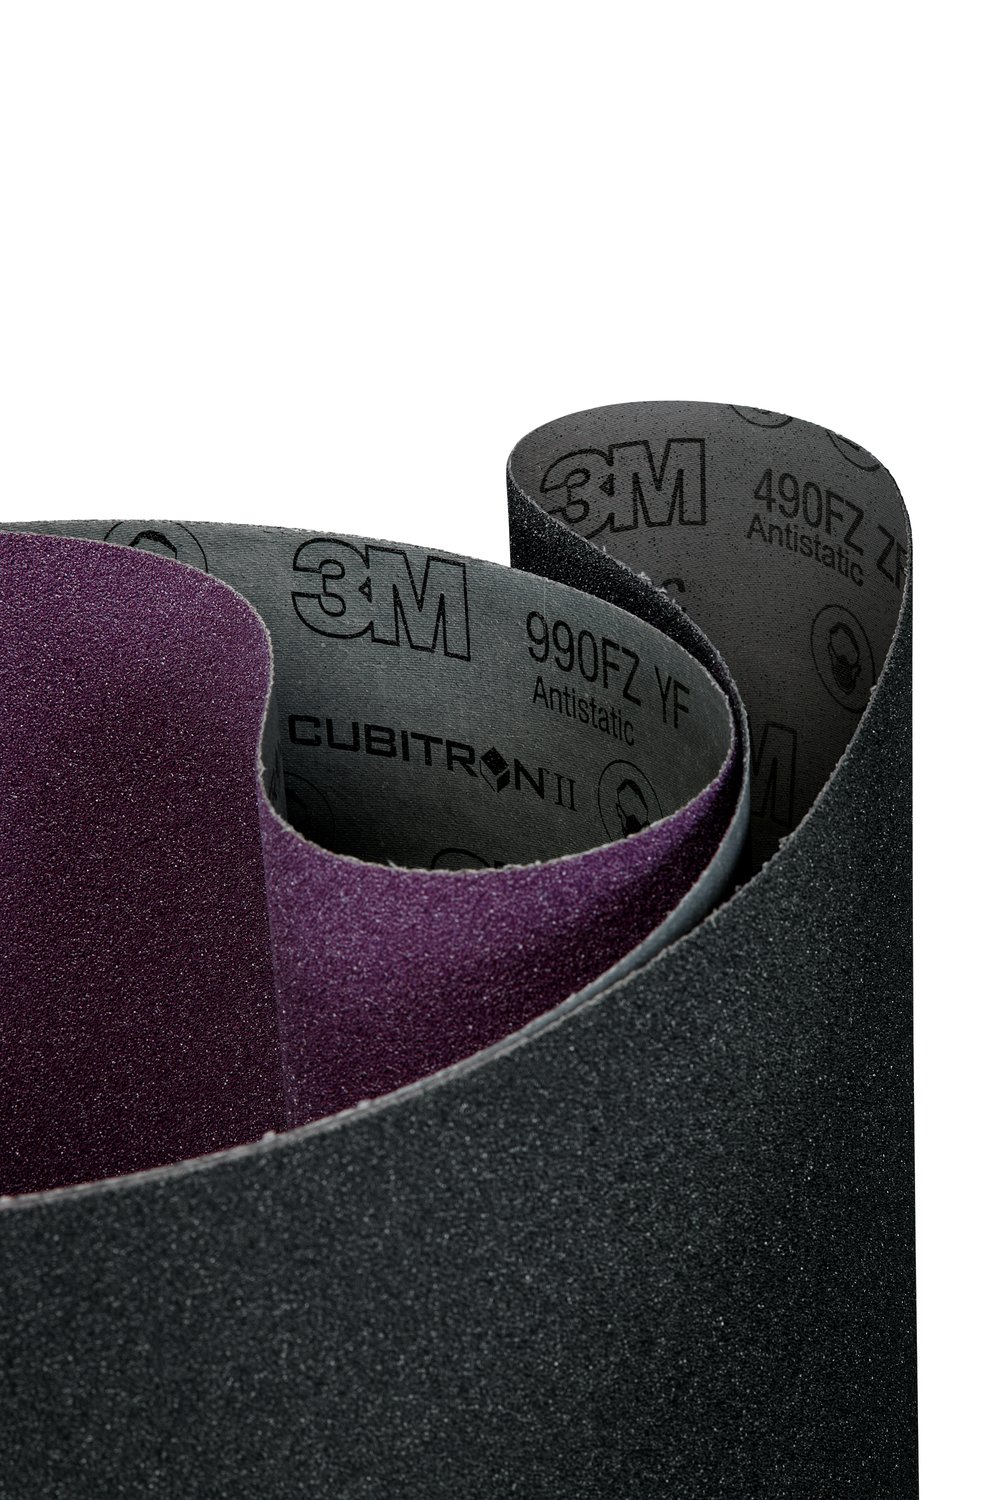 7100232993 - 3M Cubitron II Cloth Belt 990FZ, 36+ ZF-weight, 67 in x 110 in, Film-
lok, Single-flex, Bulk